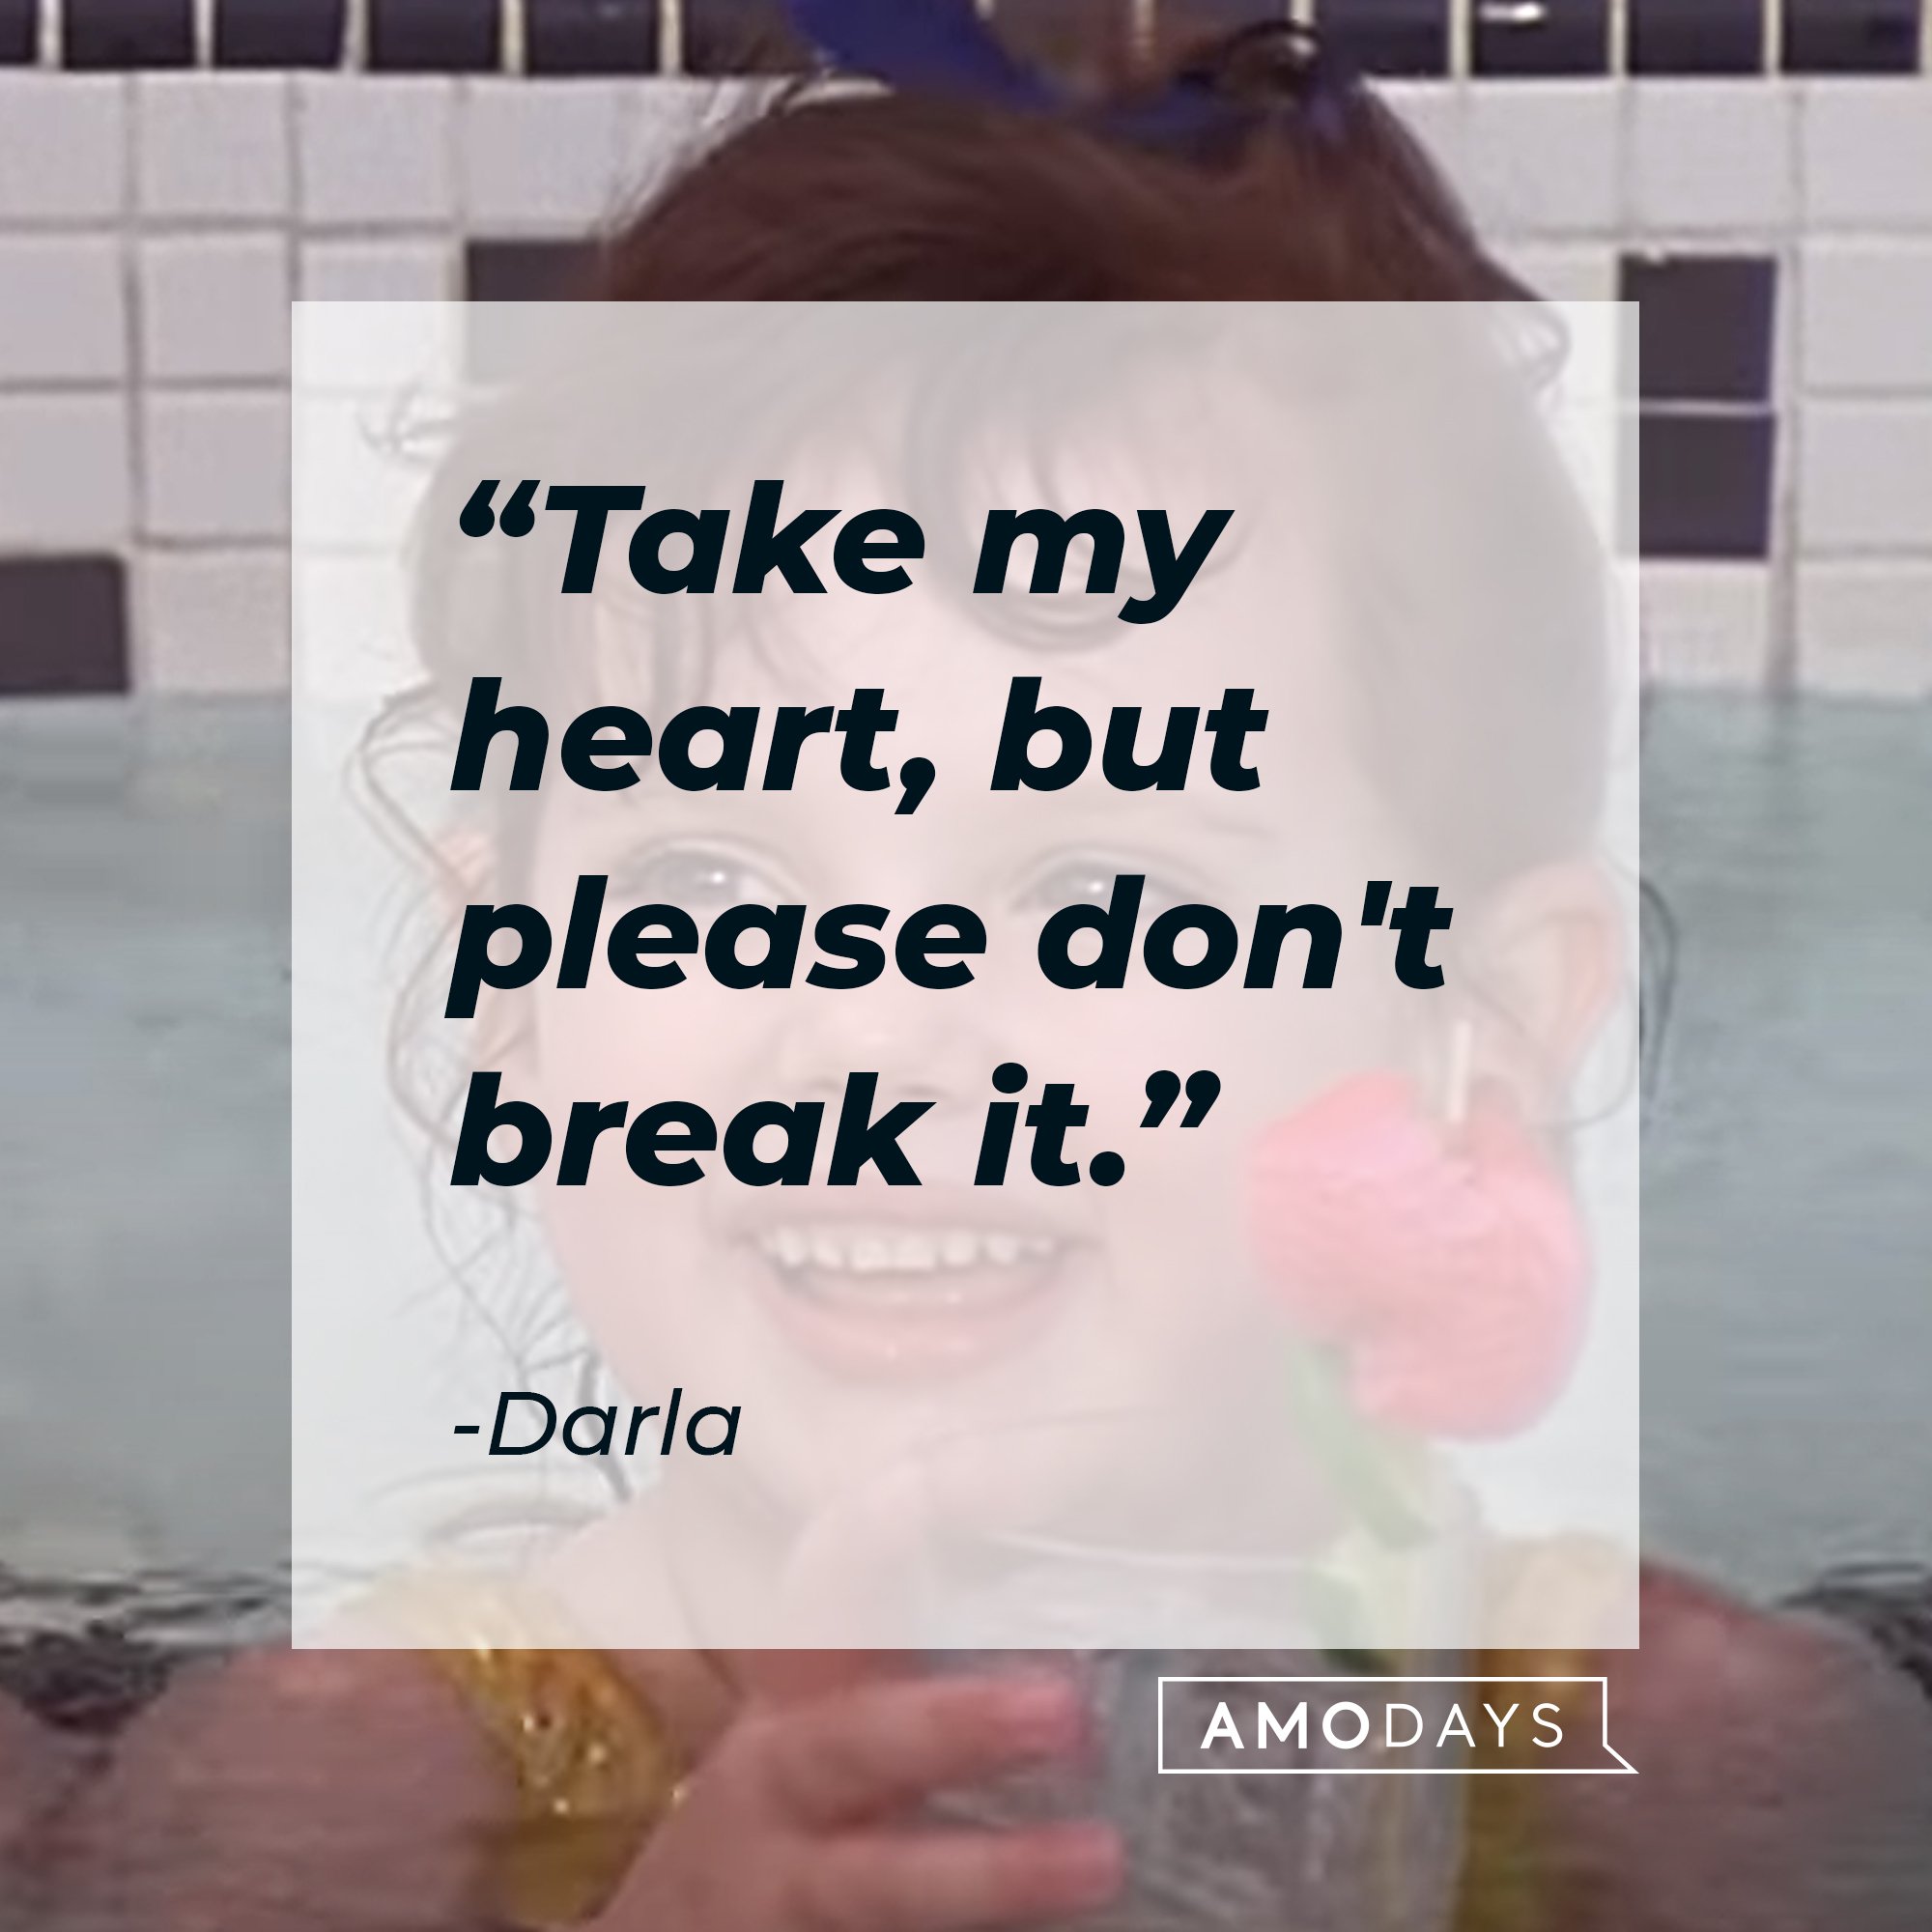 Darla’s quote: "Take my heart, but please don't break it." | Image: AmoDays